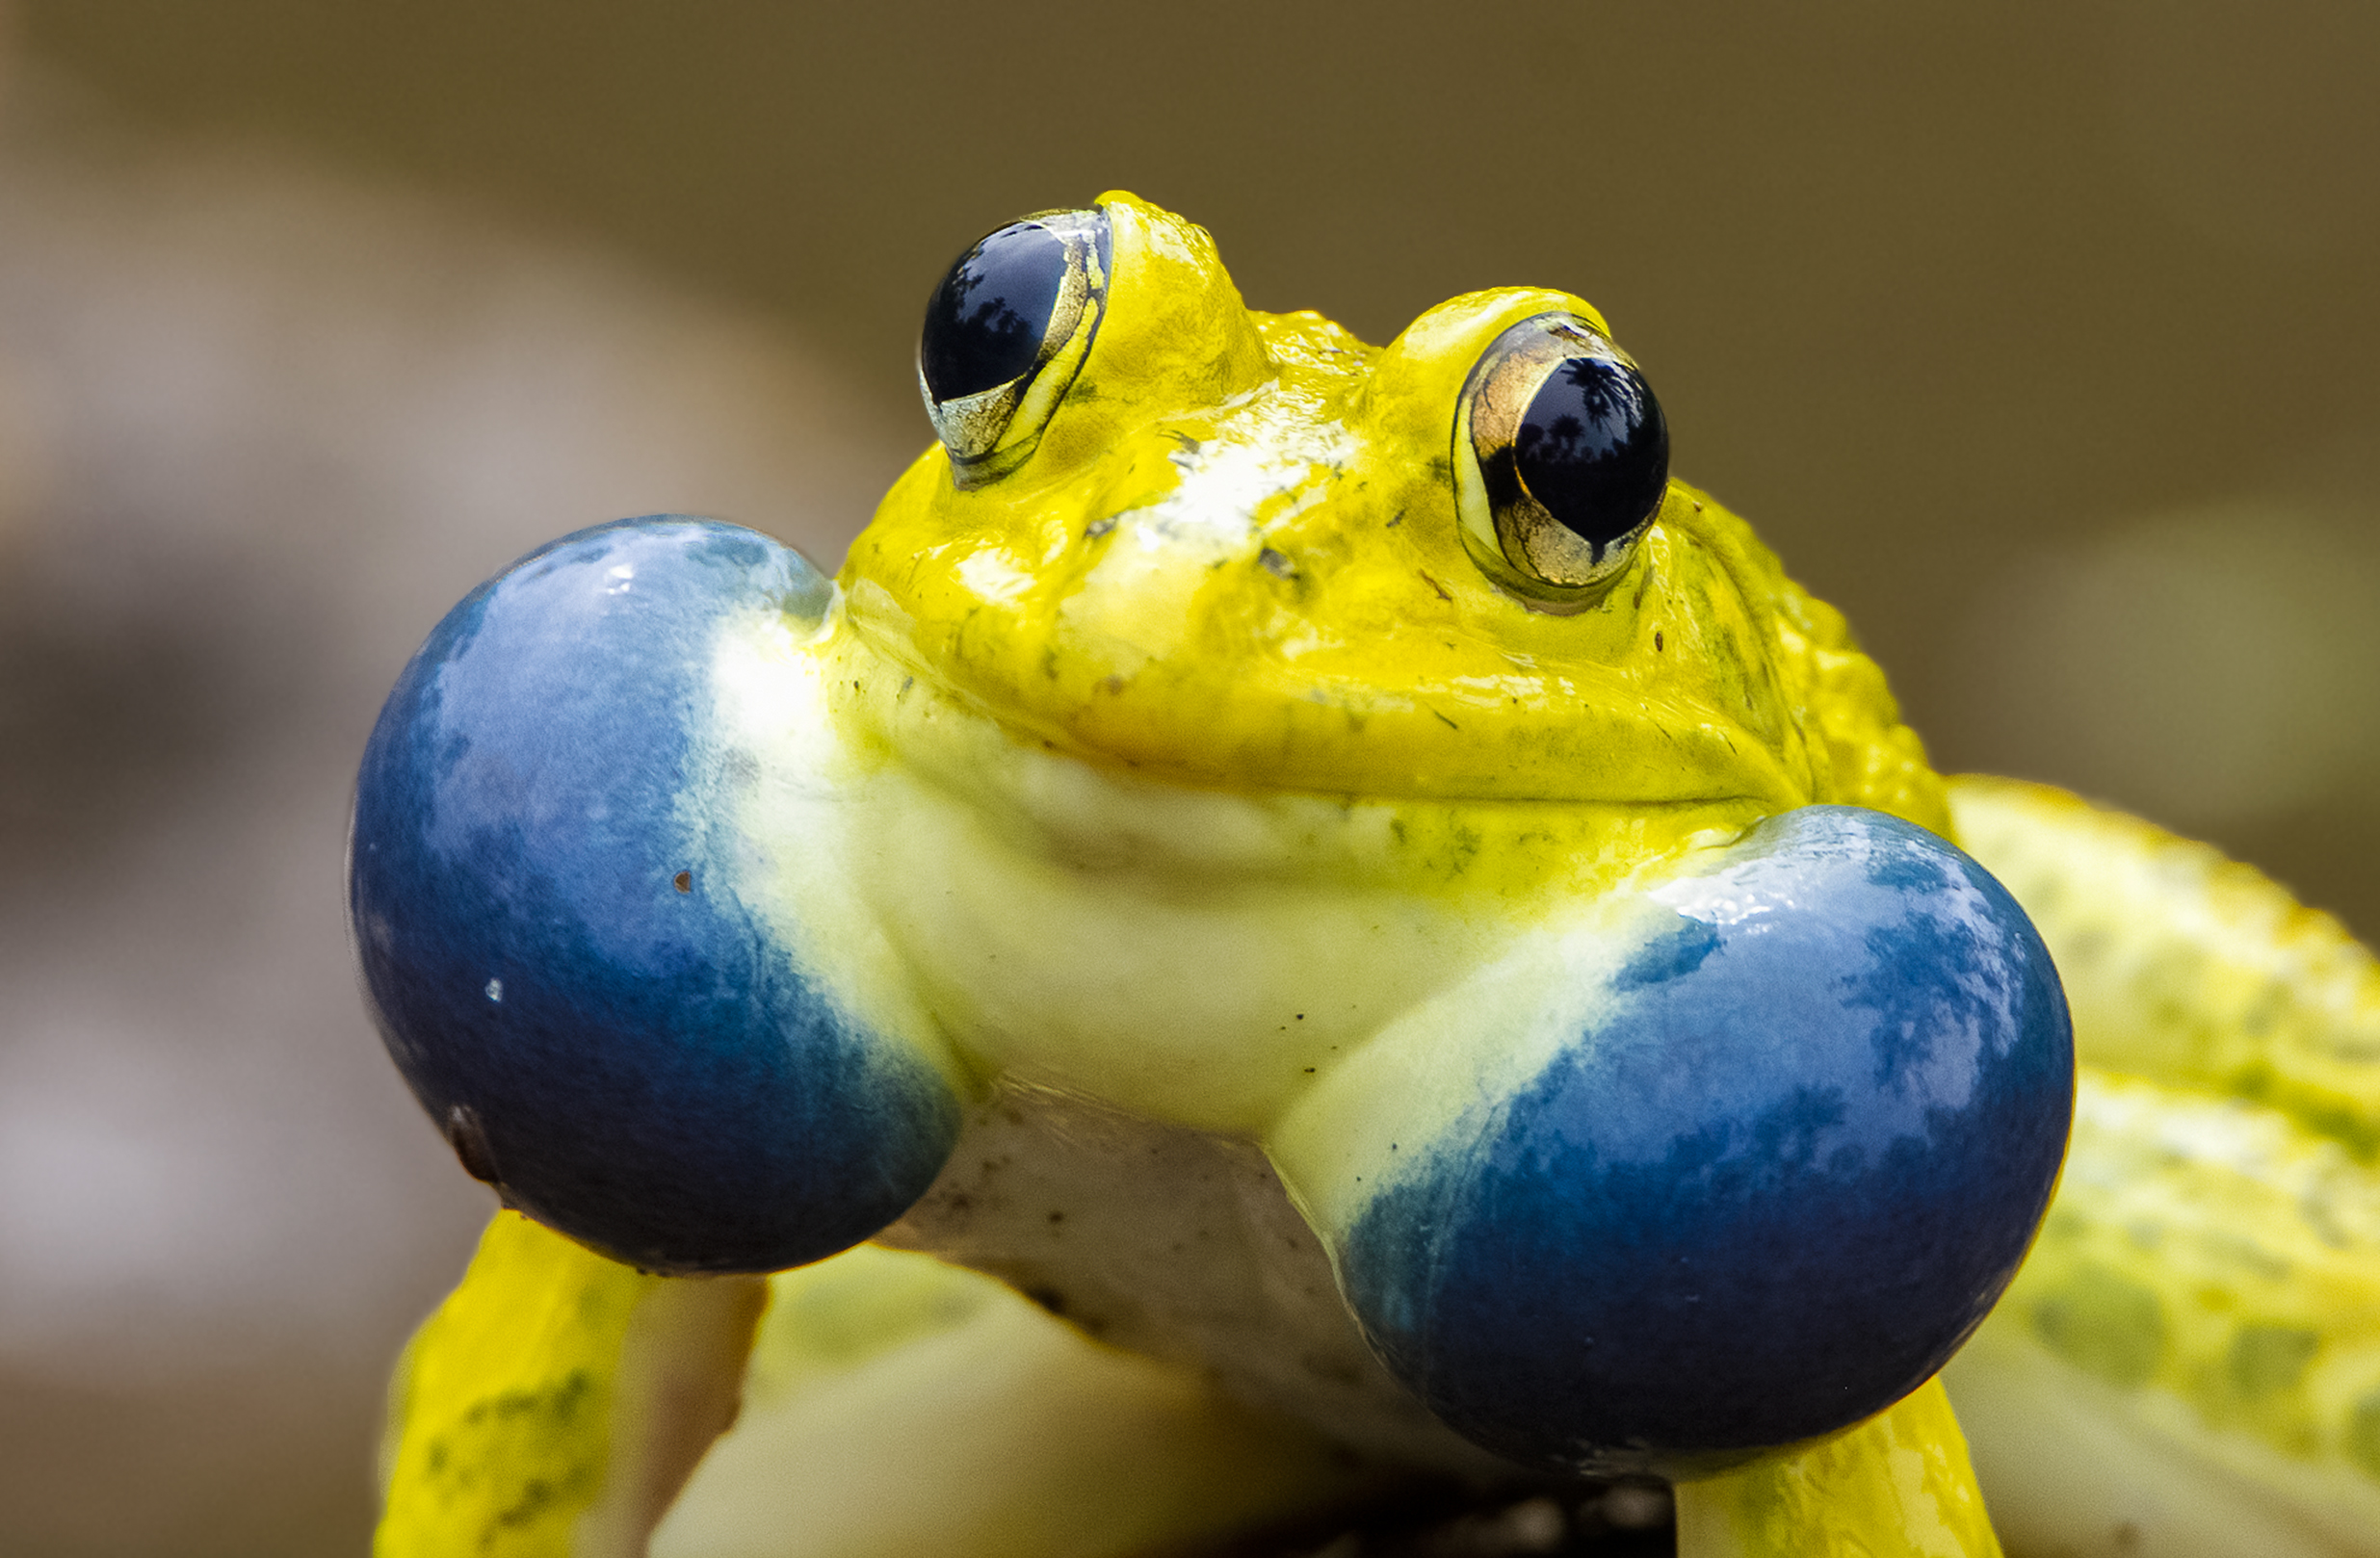 Do Indian bullfrogs have teeth?